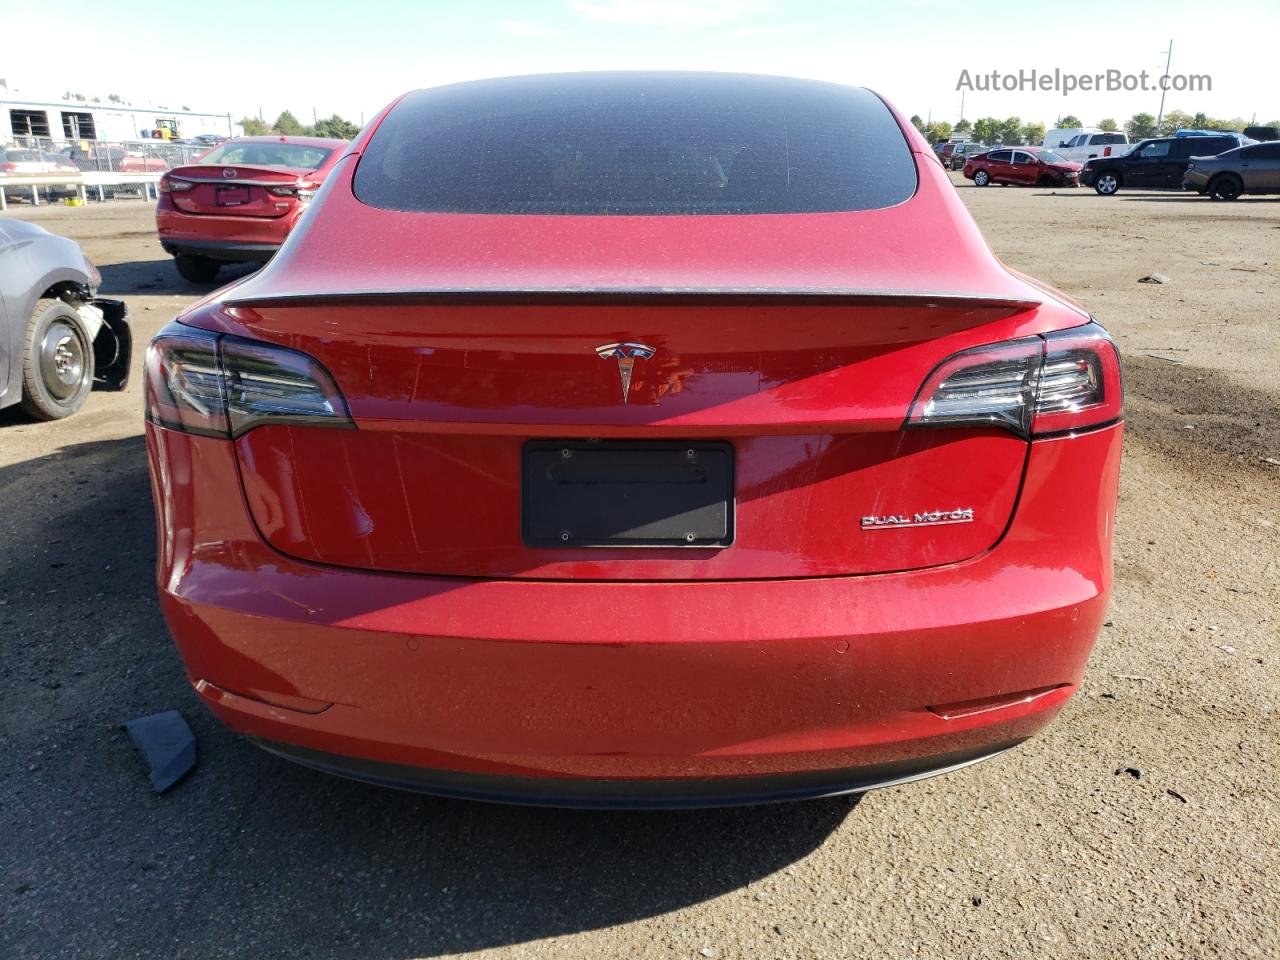 2022 Tesla Model 3  Red vin: 5YJ3E1EC4NF203862